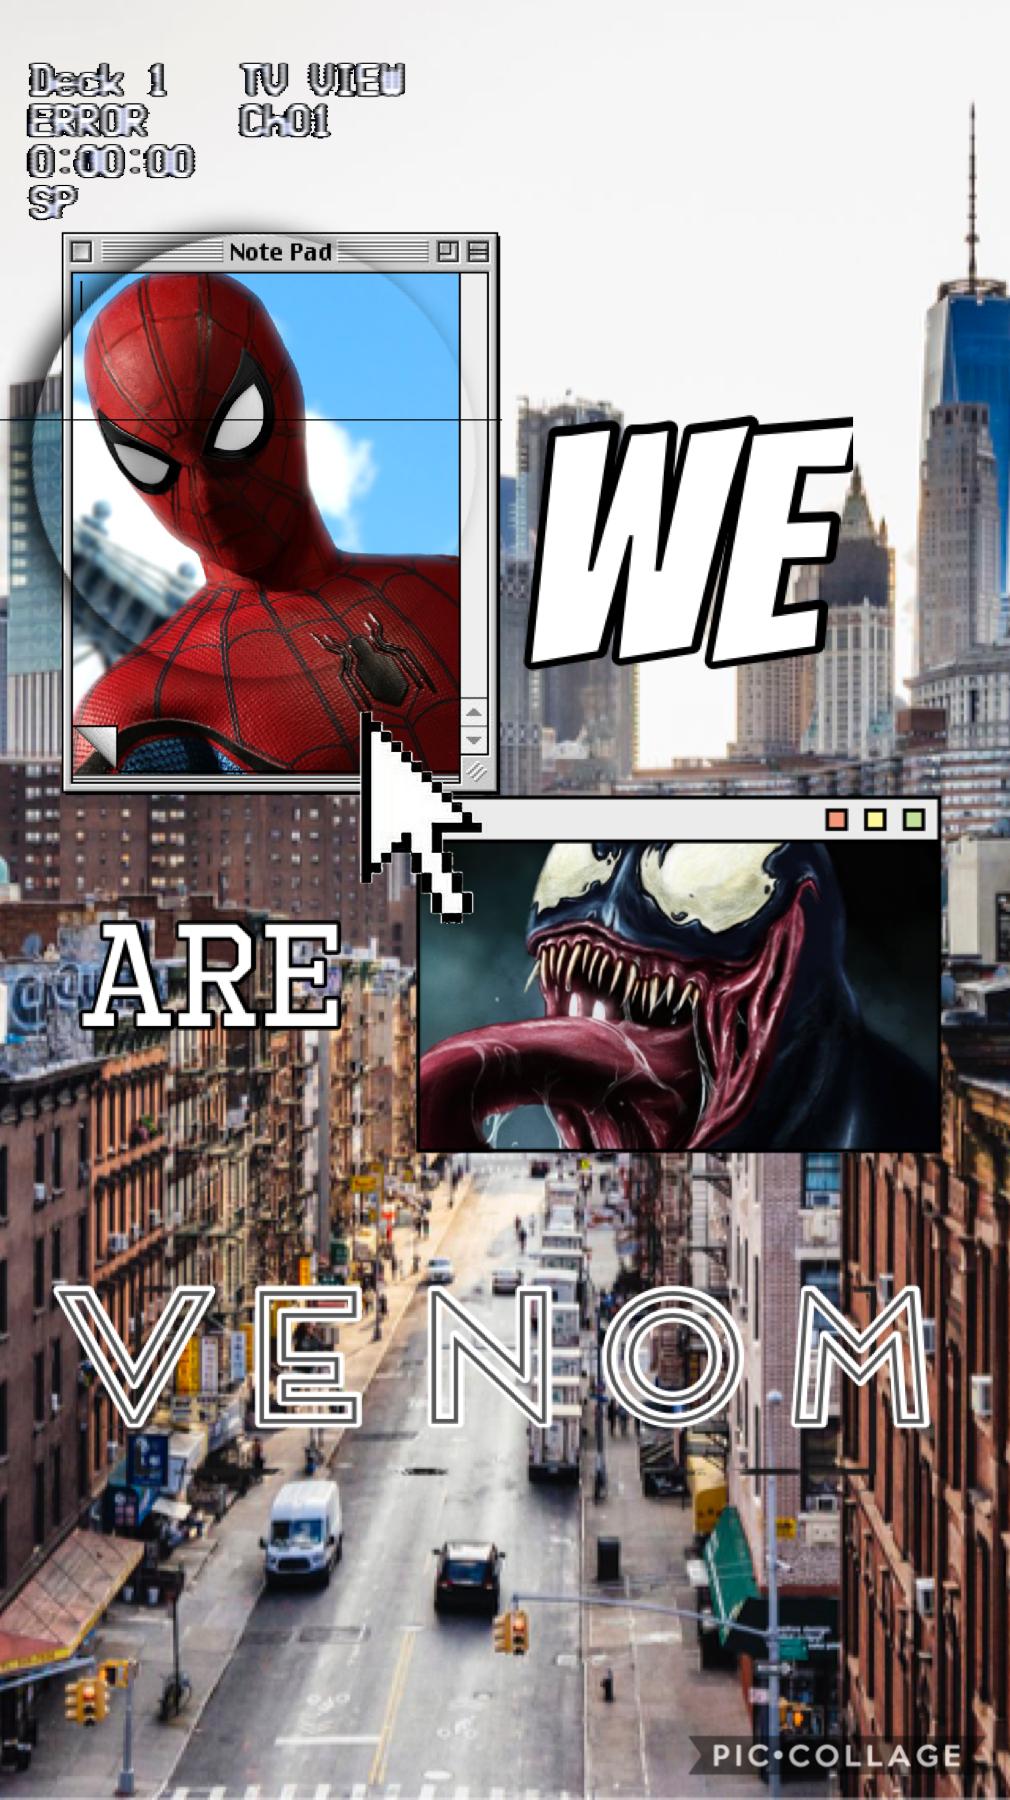 Venom vibe